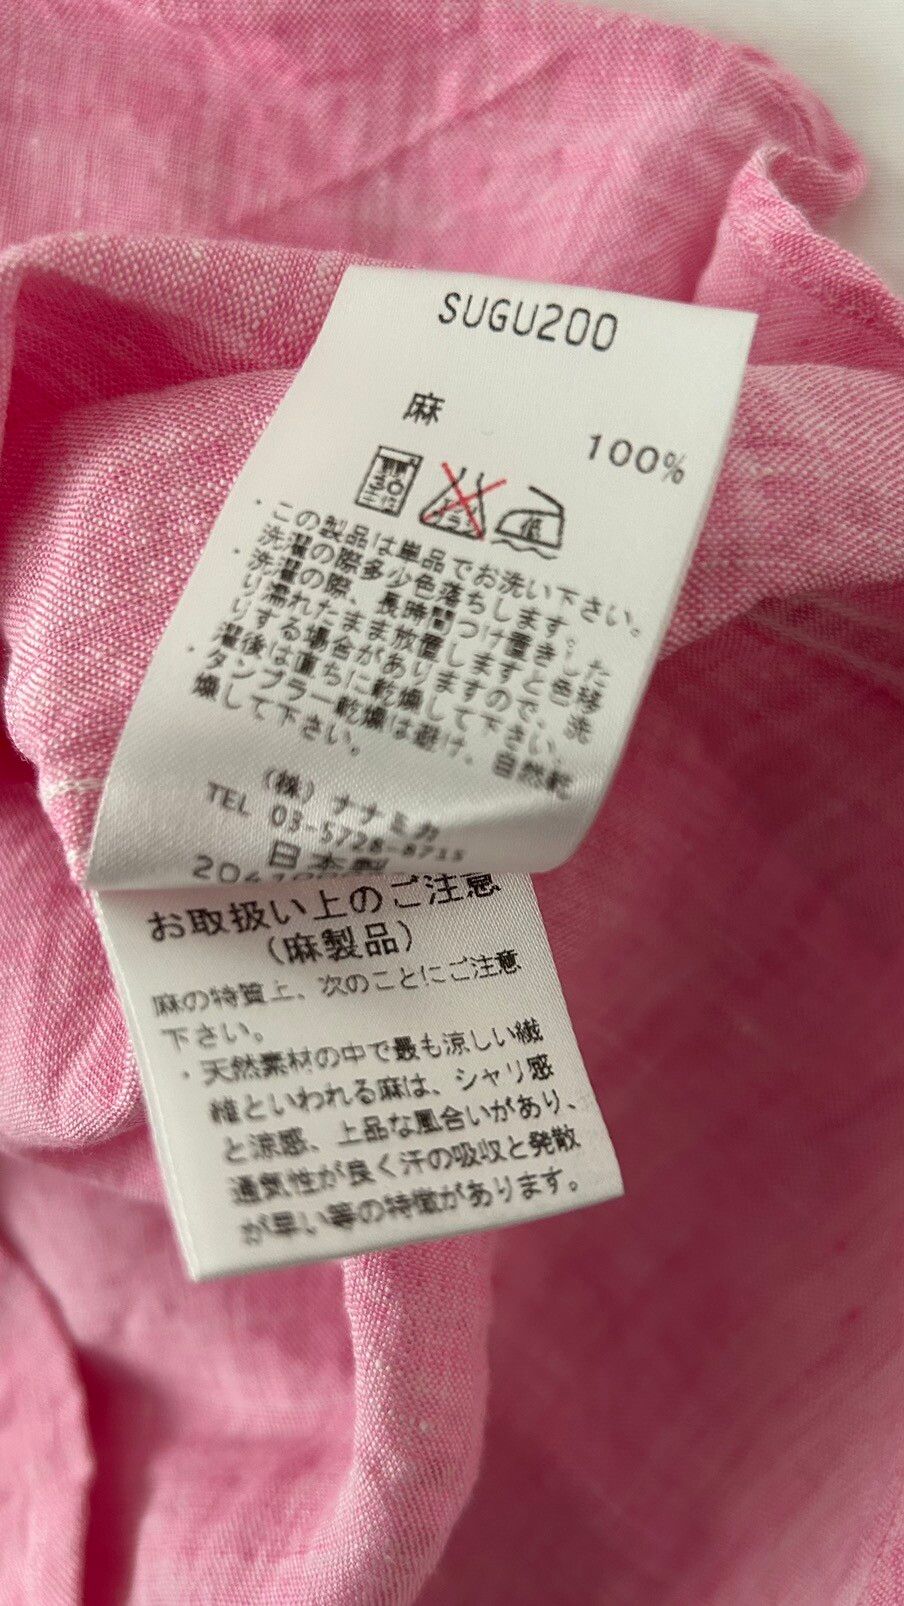 nanamica - 100% linen shirt - medium - made in japan - 8